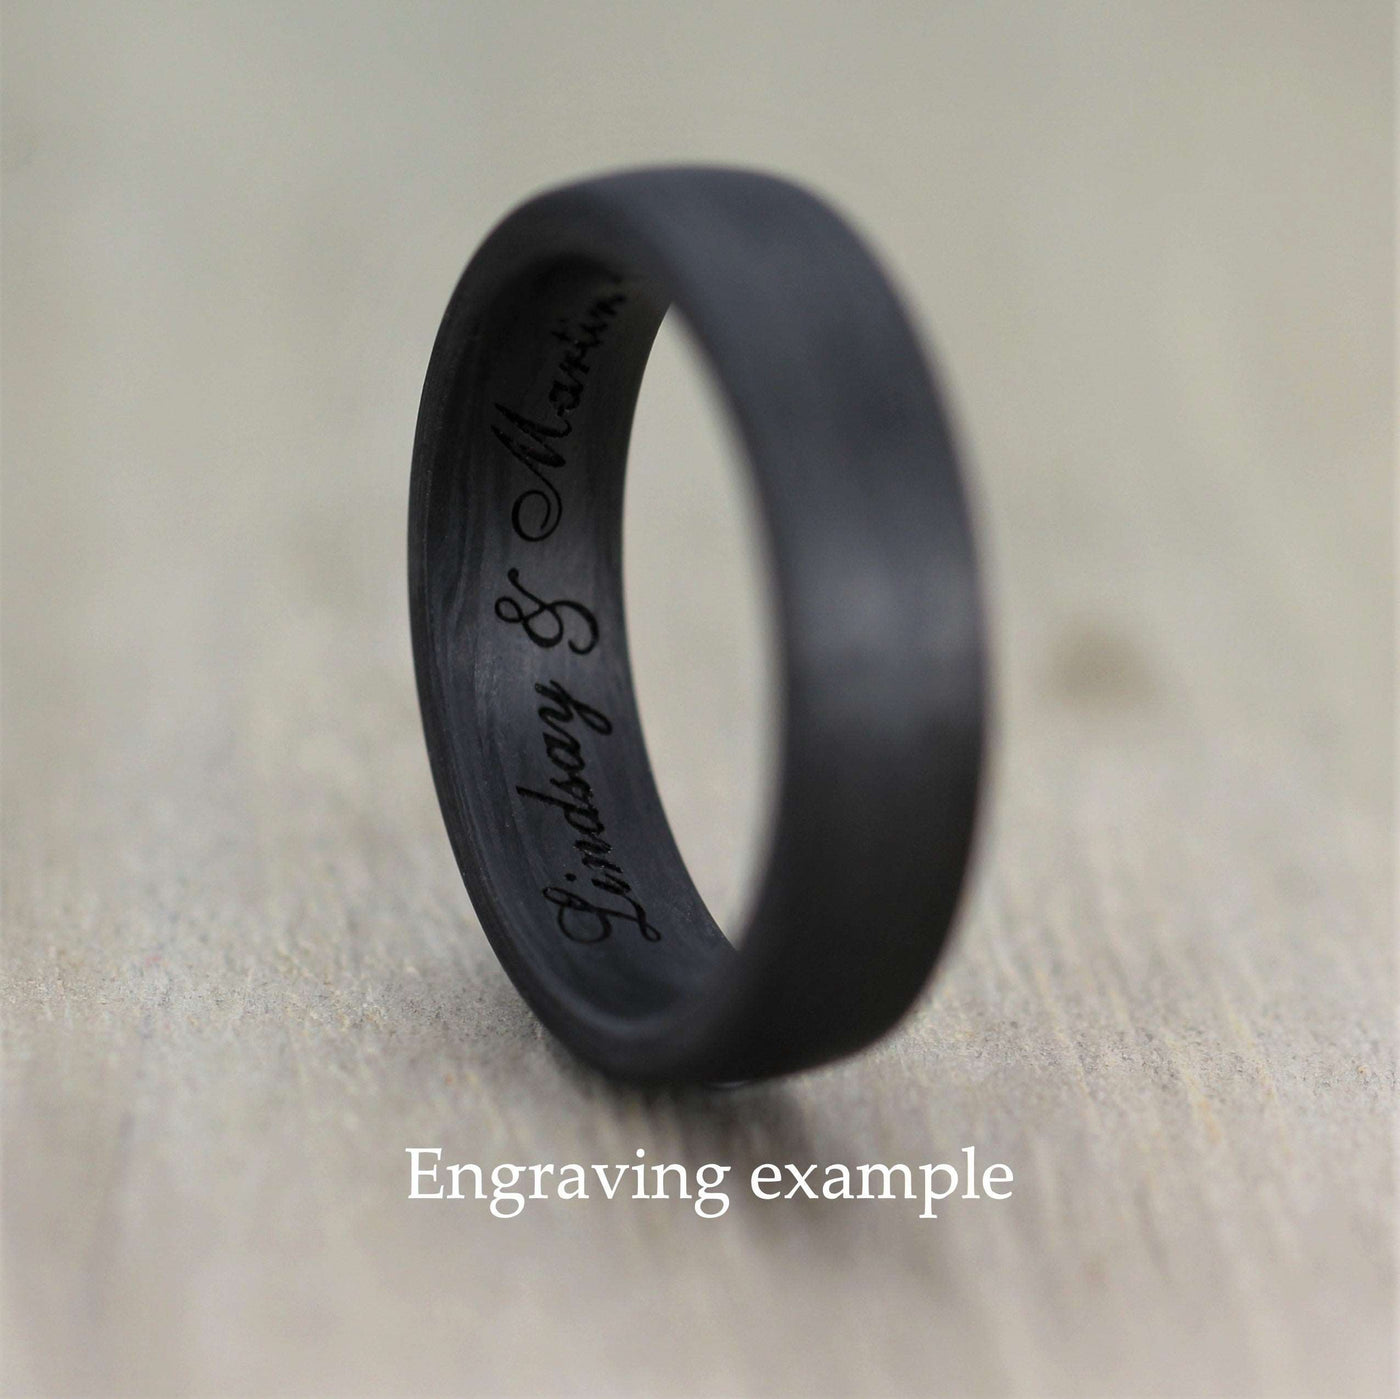 Carbon Fibre & Palladium Ring with Free Engraving!